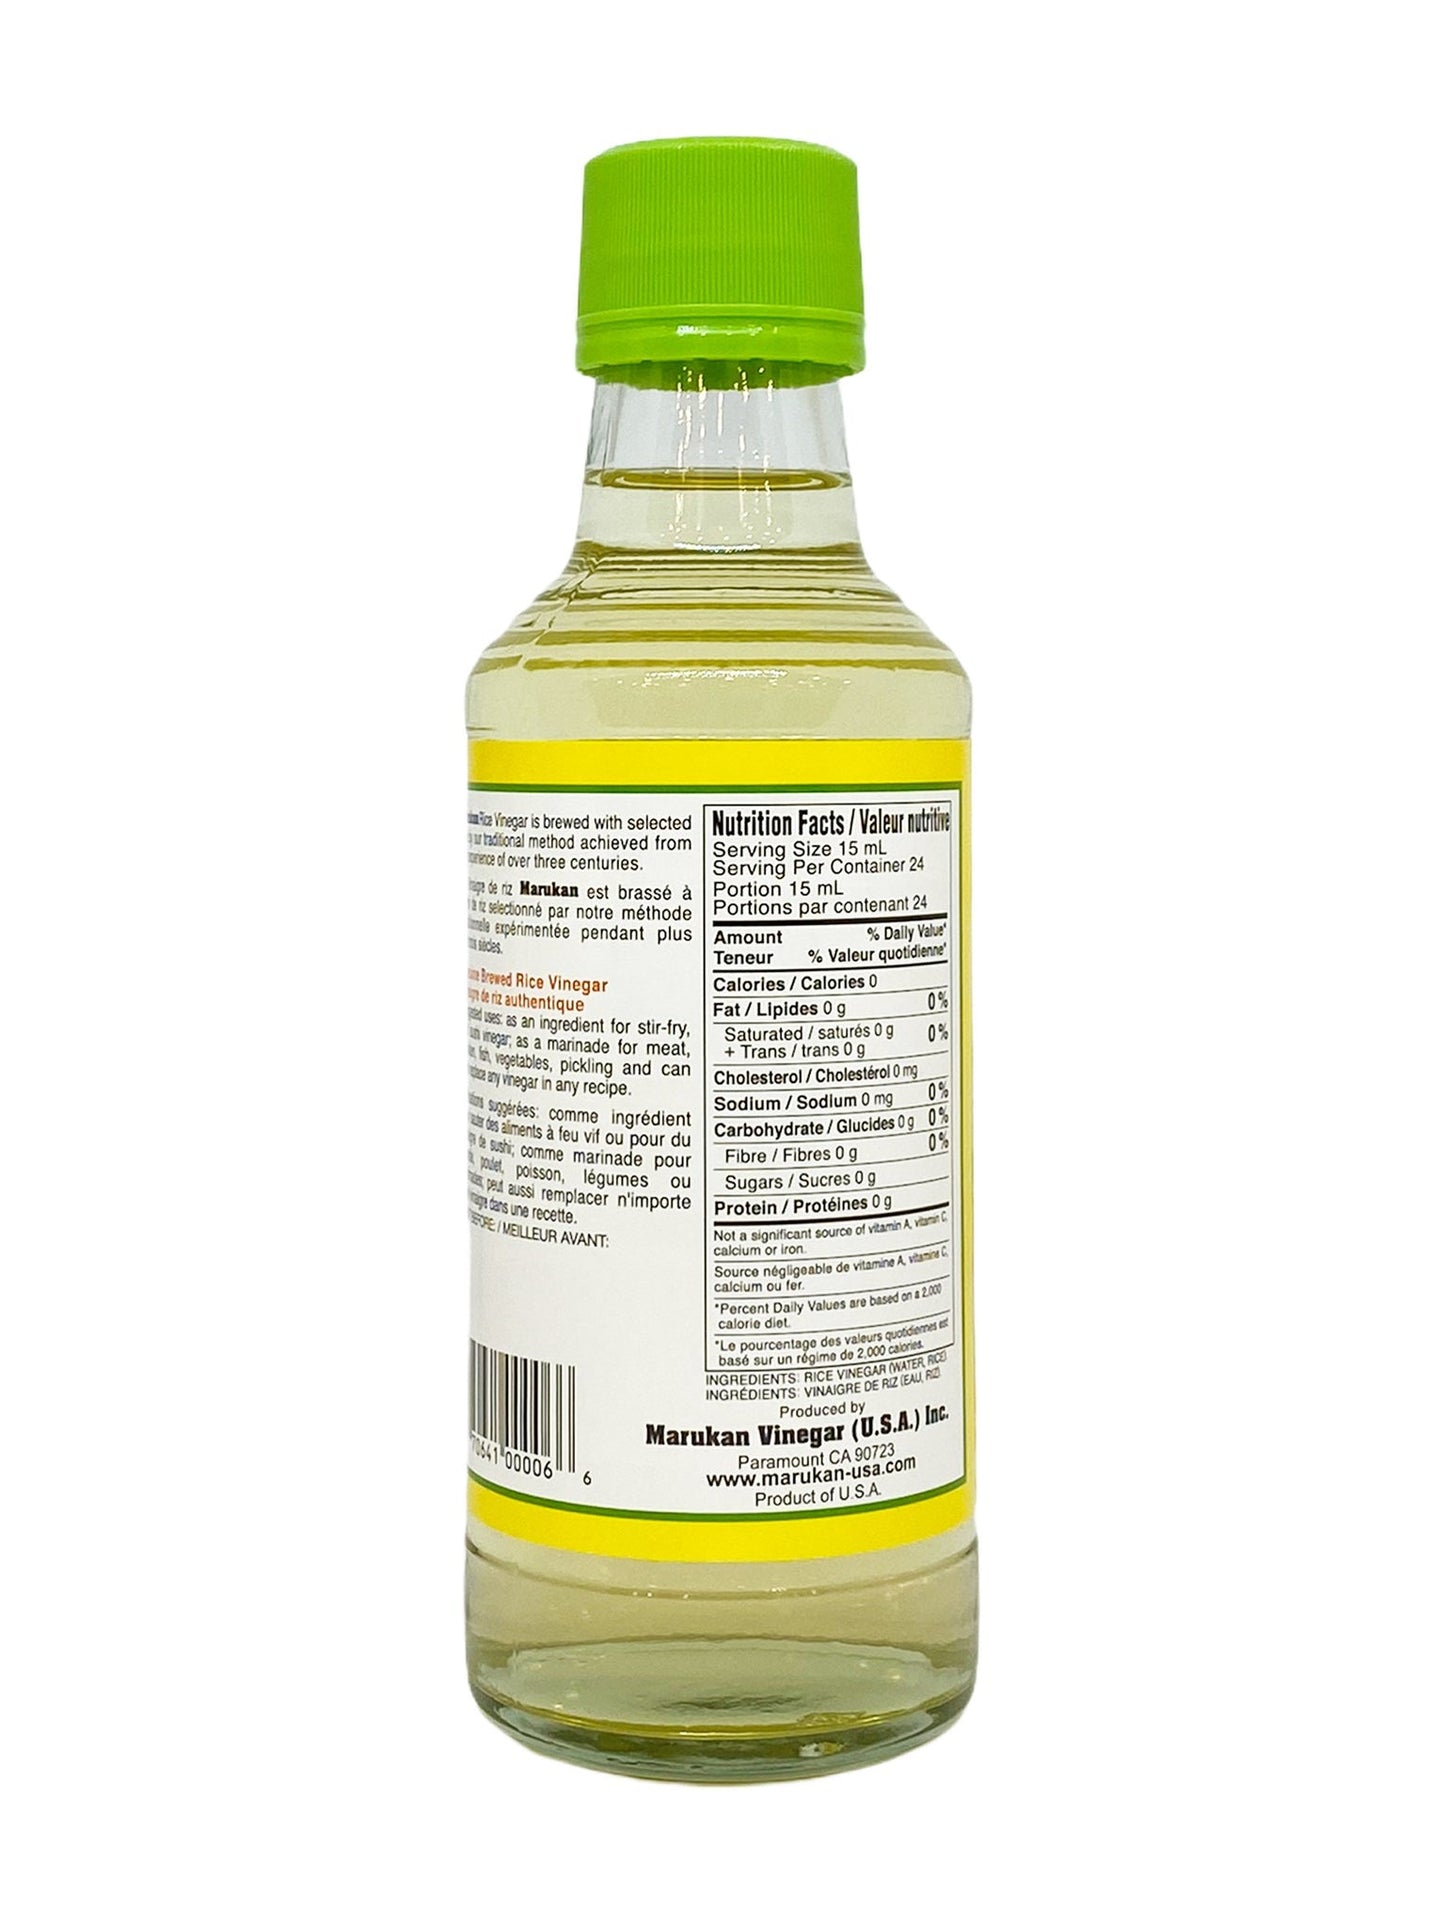 Marukan Genuine Brewed Rice Vinegar (355ML)